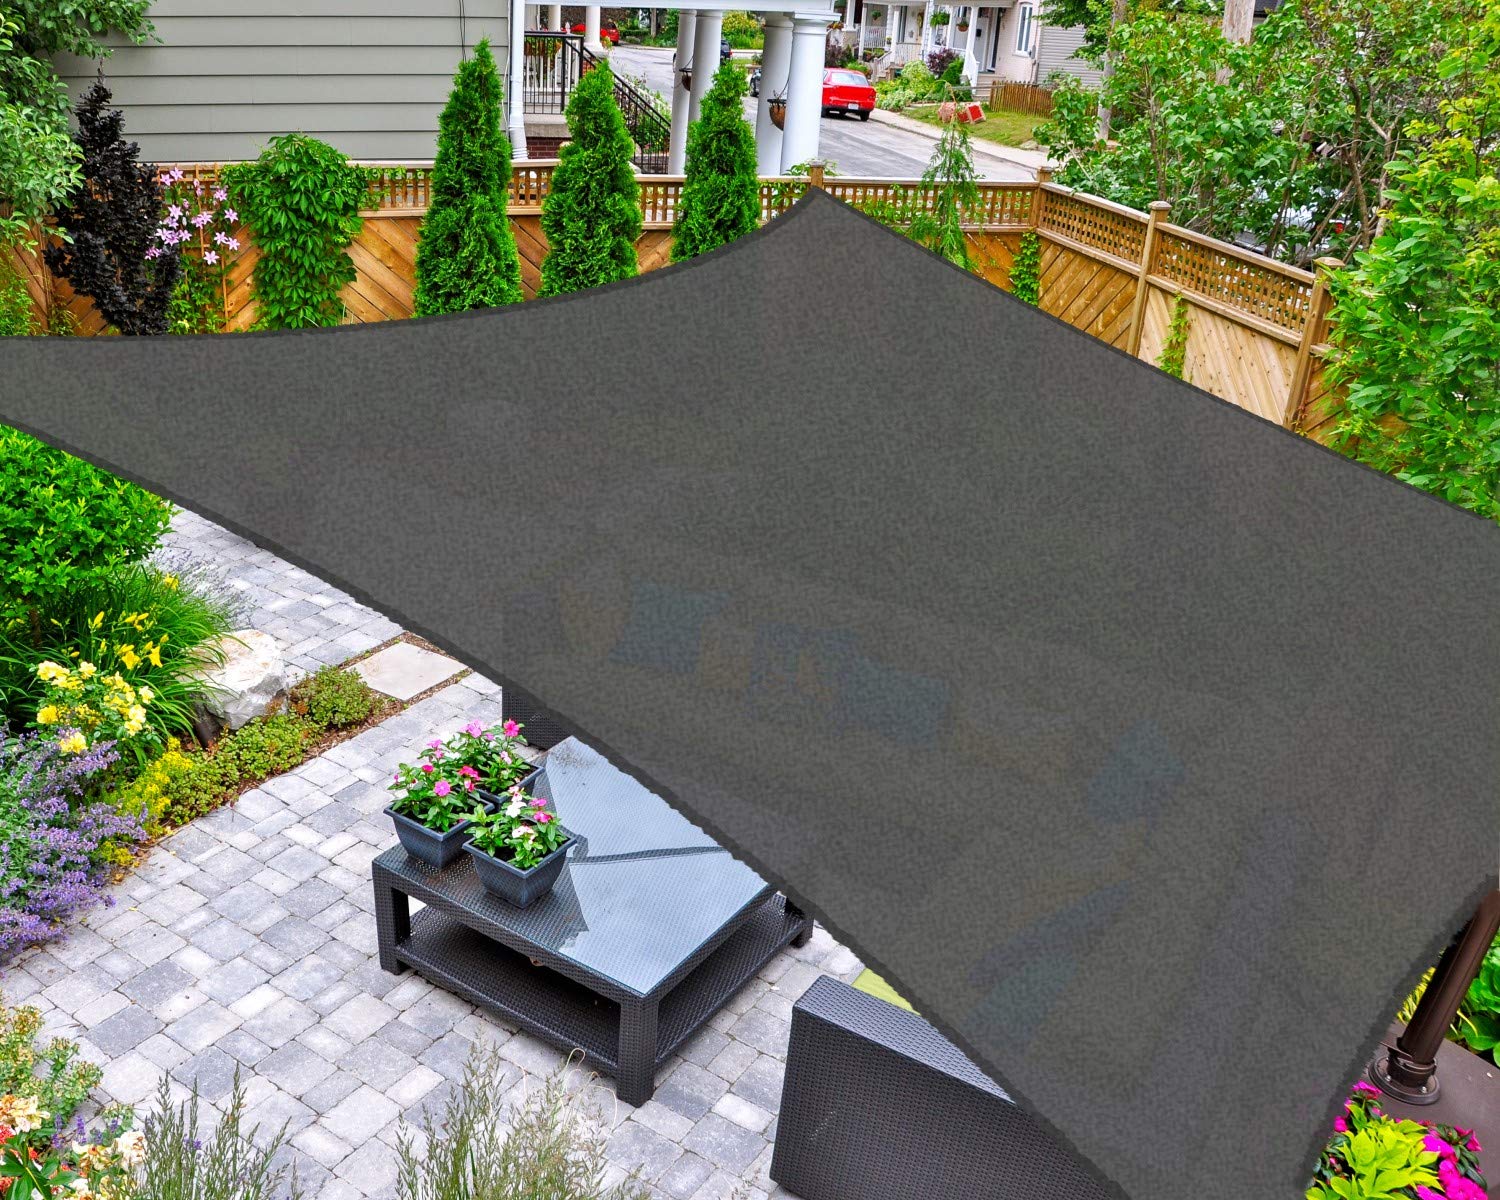 AsterOutdoor Sun Shade Sail Rectangle 10' x 13' UV Block Canopy for Patio Backyard Lawn Garden Outdoor Activities, Graphite - UK GEMS